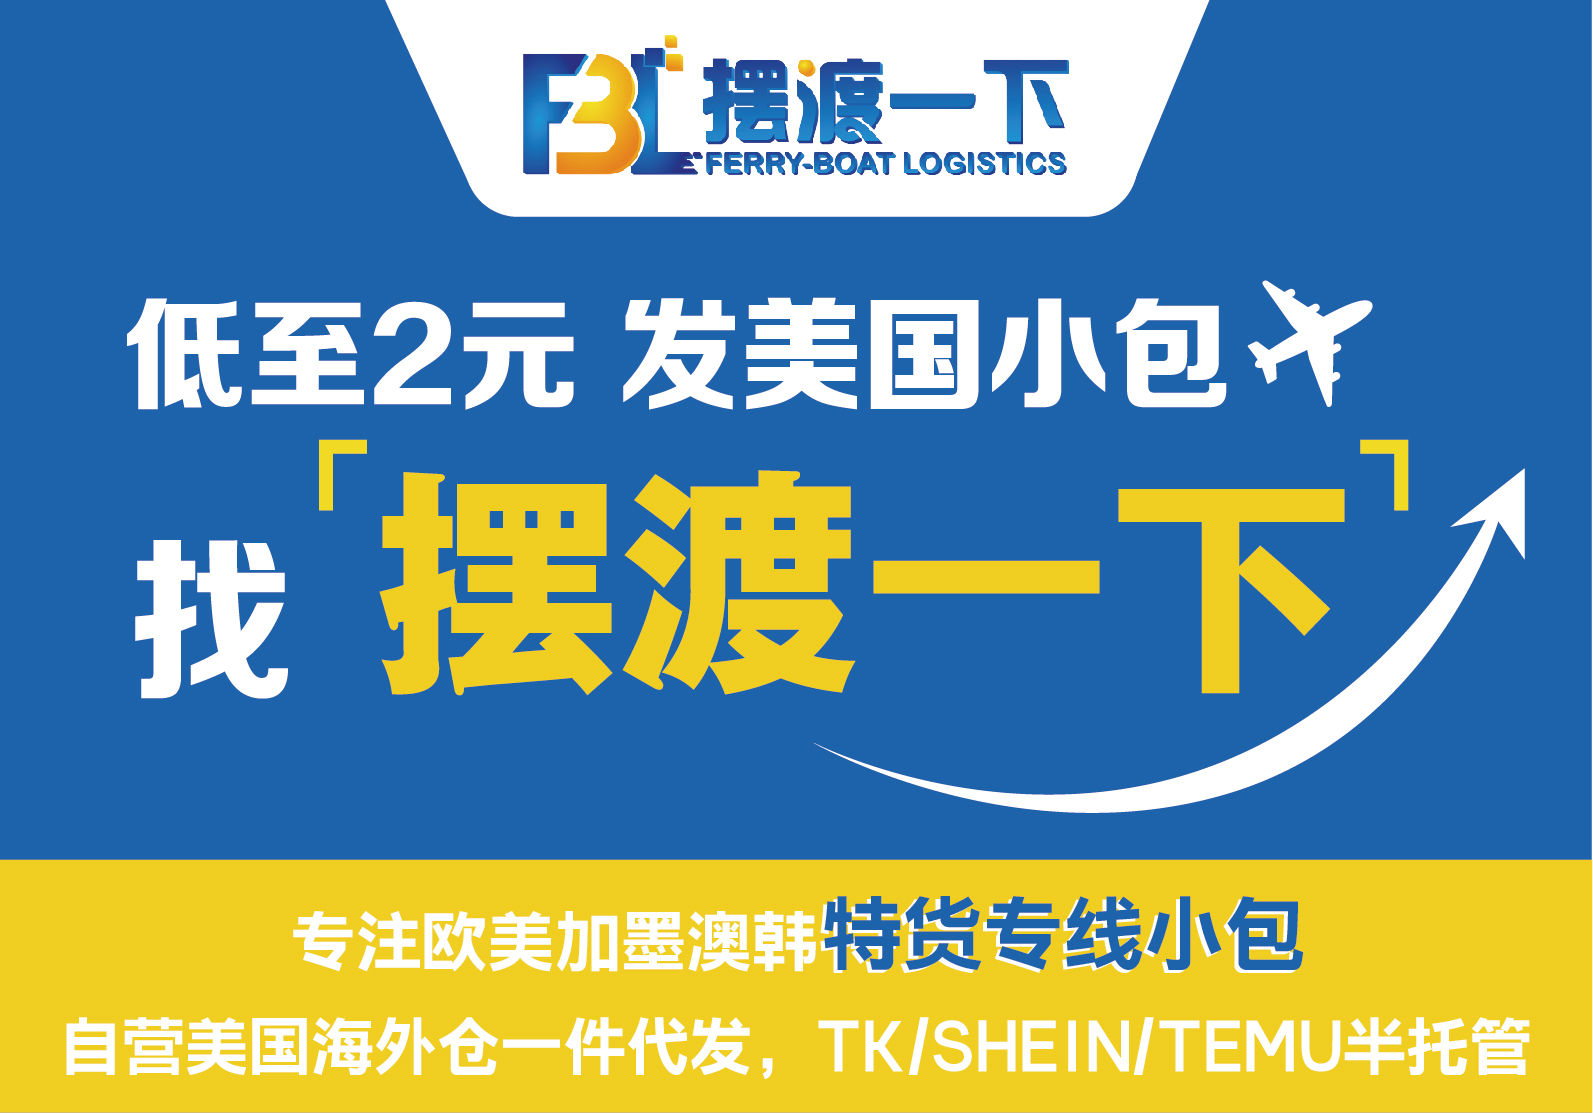  Shenzhen Ferry Logistics Co., Ltd